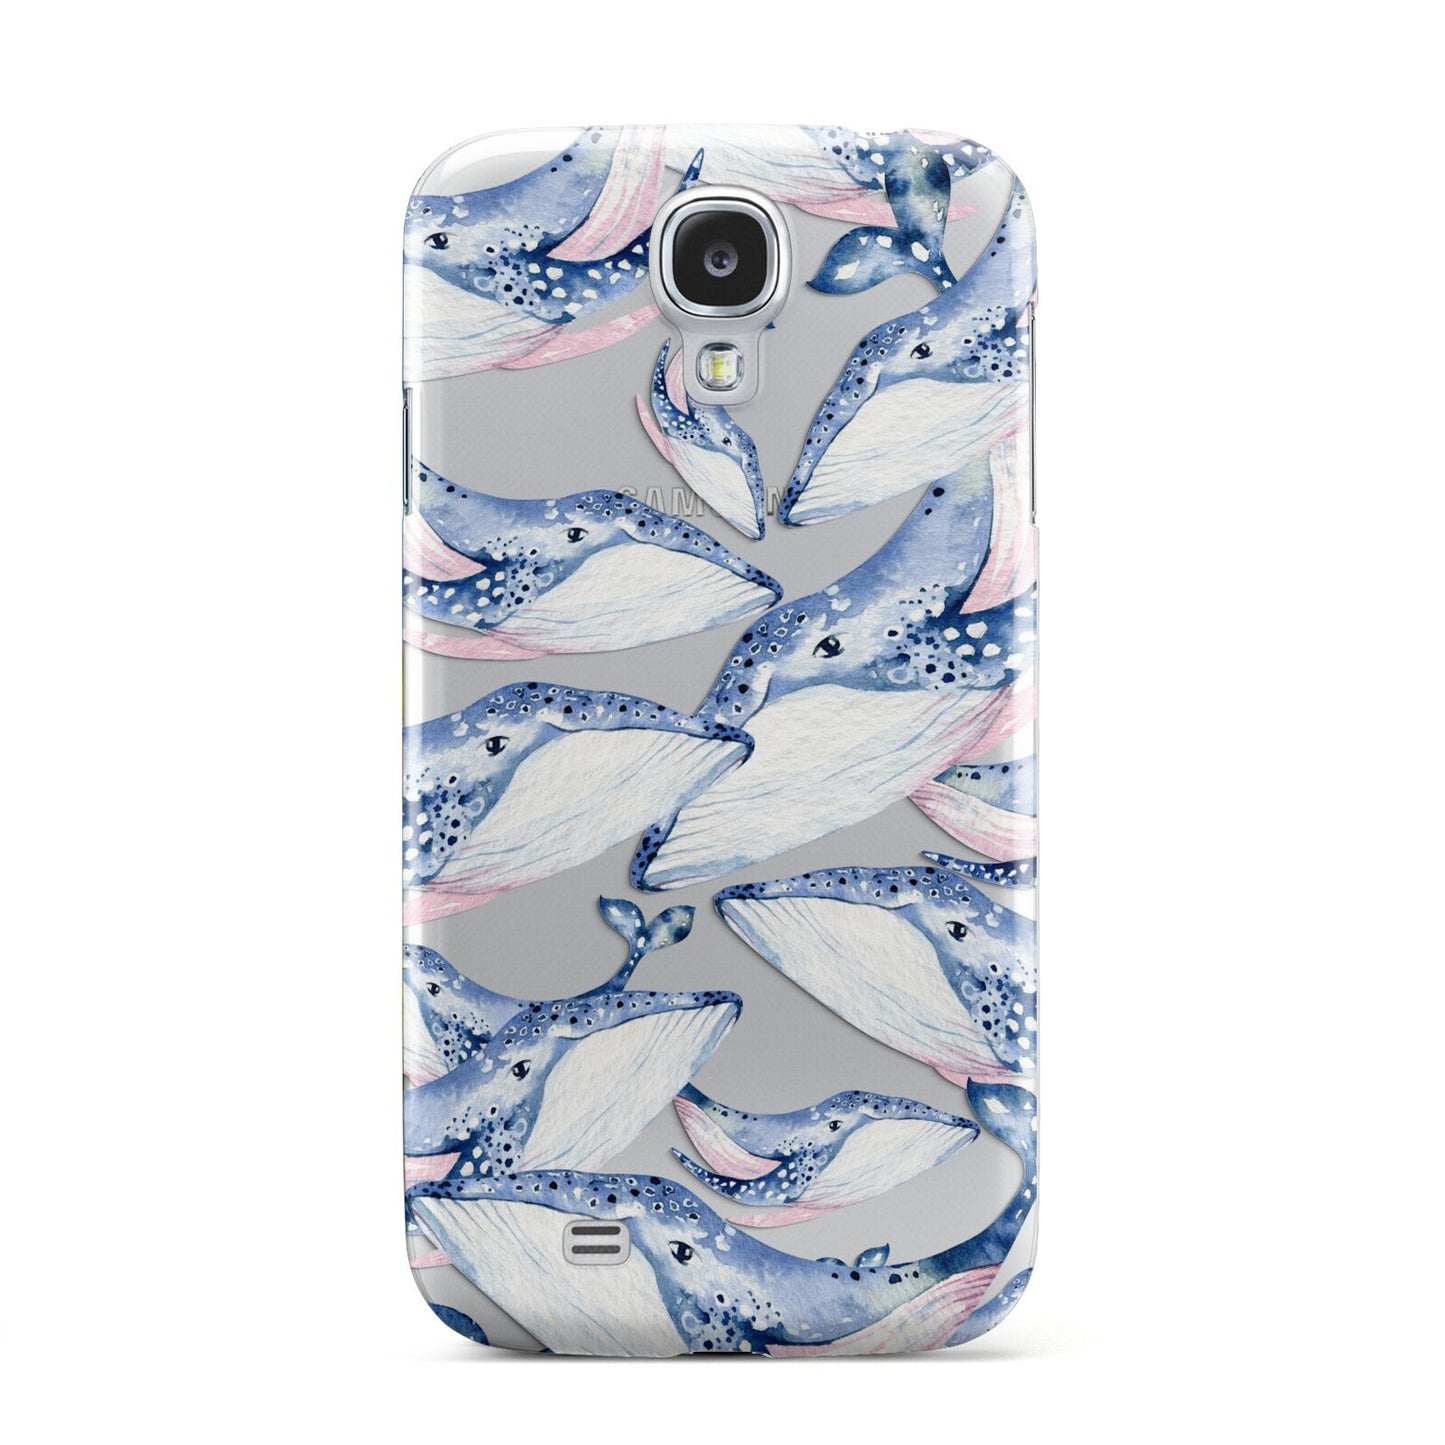 Whale Samsung Galaxy S4 Case